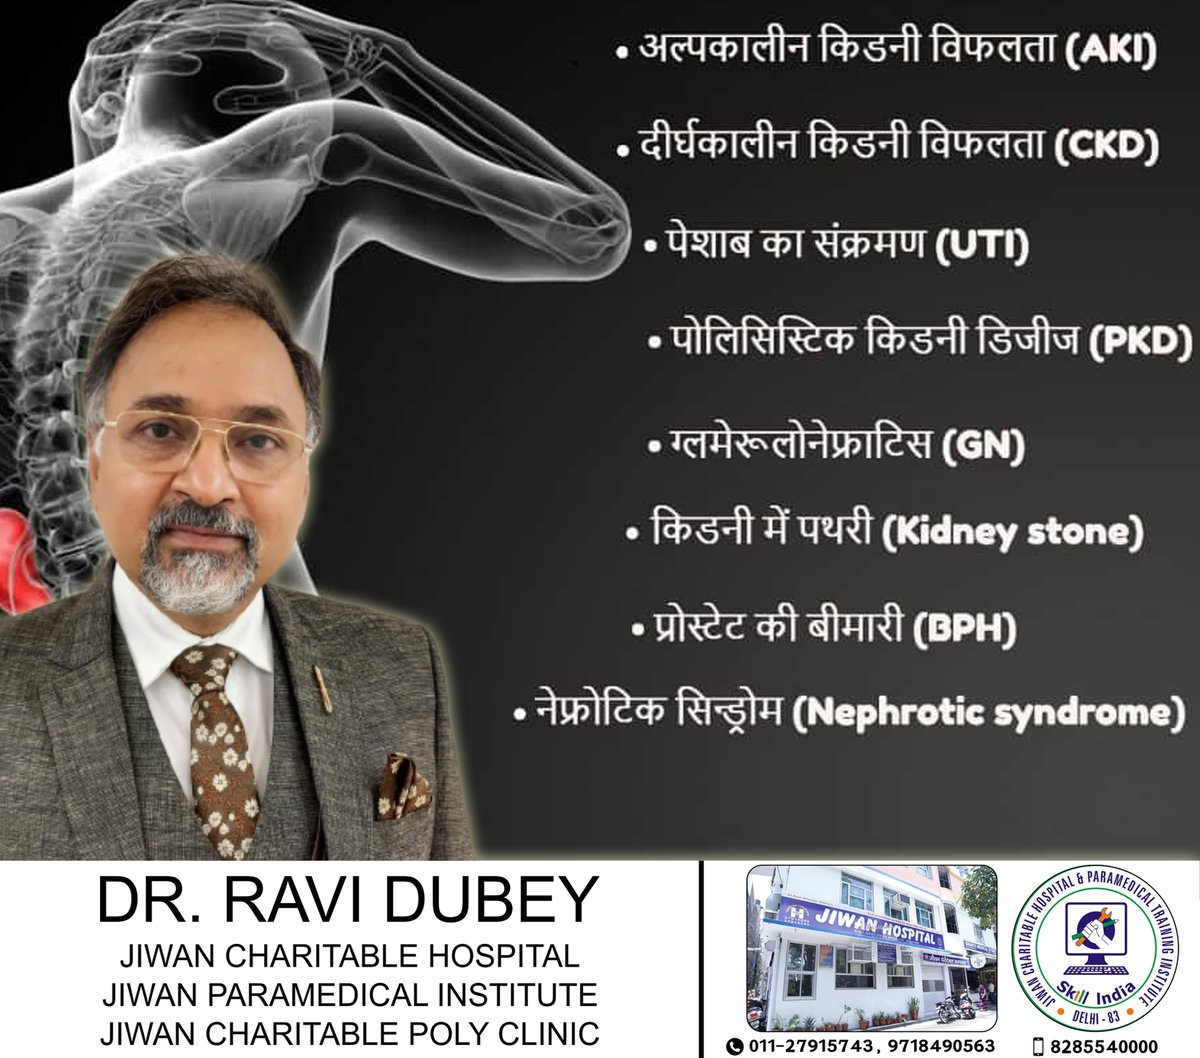 Jiwan Charitable Hospital
Address: R-225-230, Mangolpuri, Delhi, India
Call us: 011-27916689, 27915743

#UTI #kidneycare #backpain #neckpain #kneepain #chronicpain #NephroticSyndrome #osteoarthritis #instagram #jiwancharitablehospital #hospitalpharmacy #drravidubey